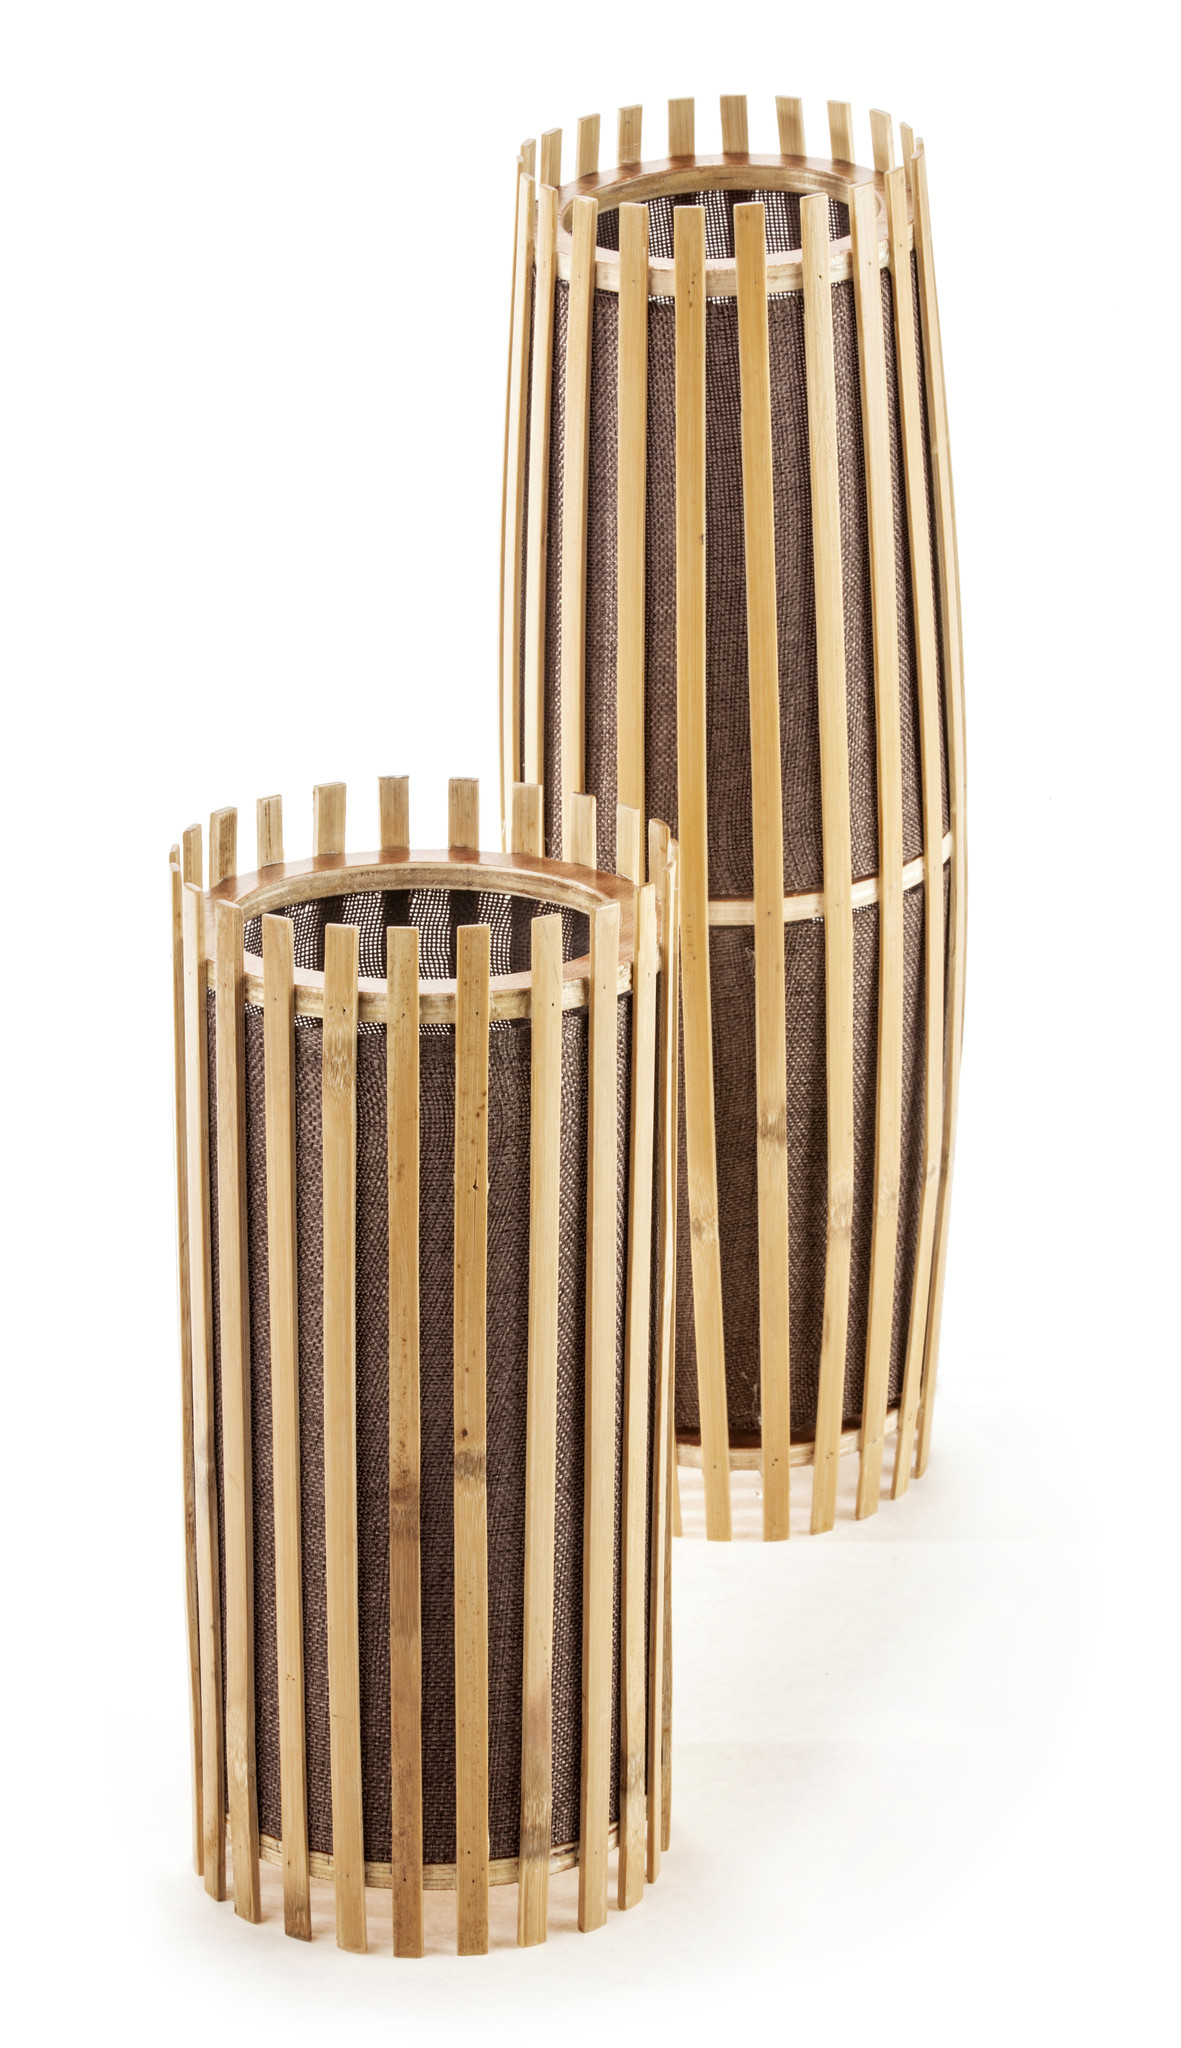 Bamboo table lamp - 10 reasons to buy | Warisan Lighting